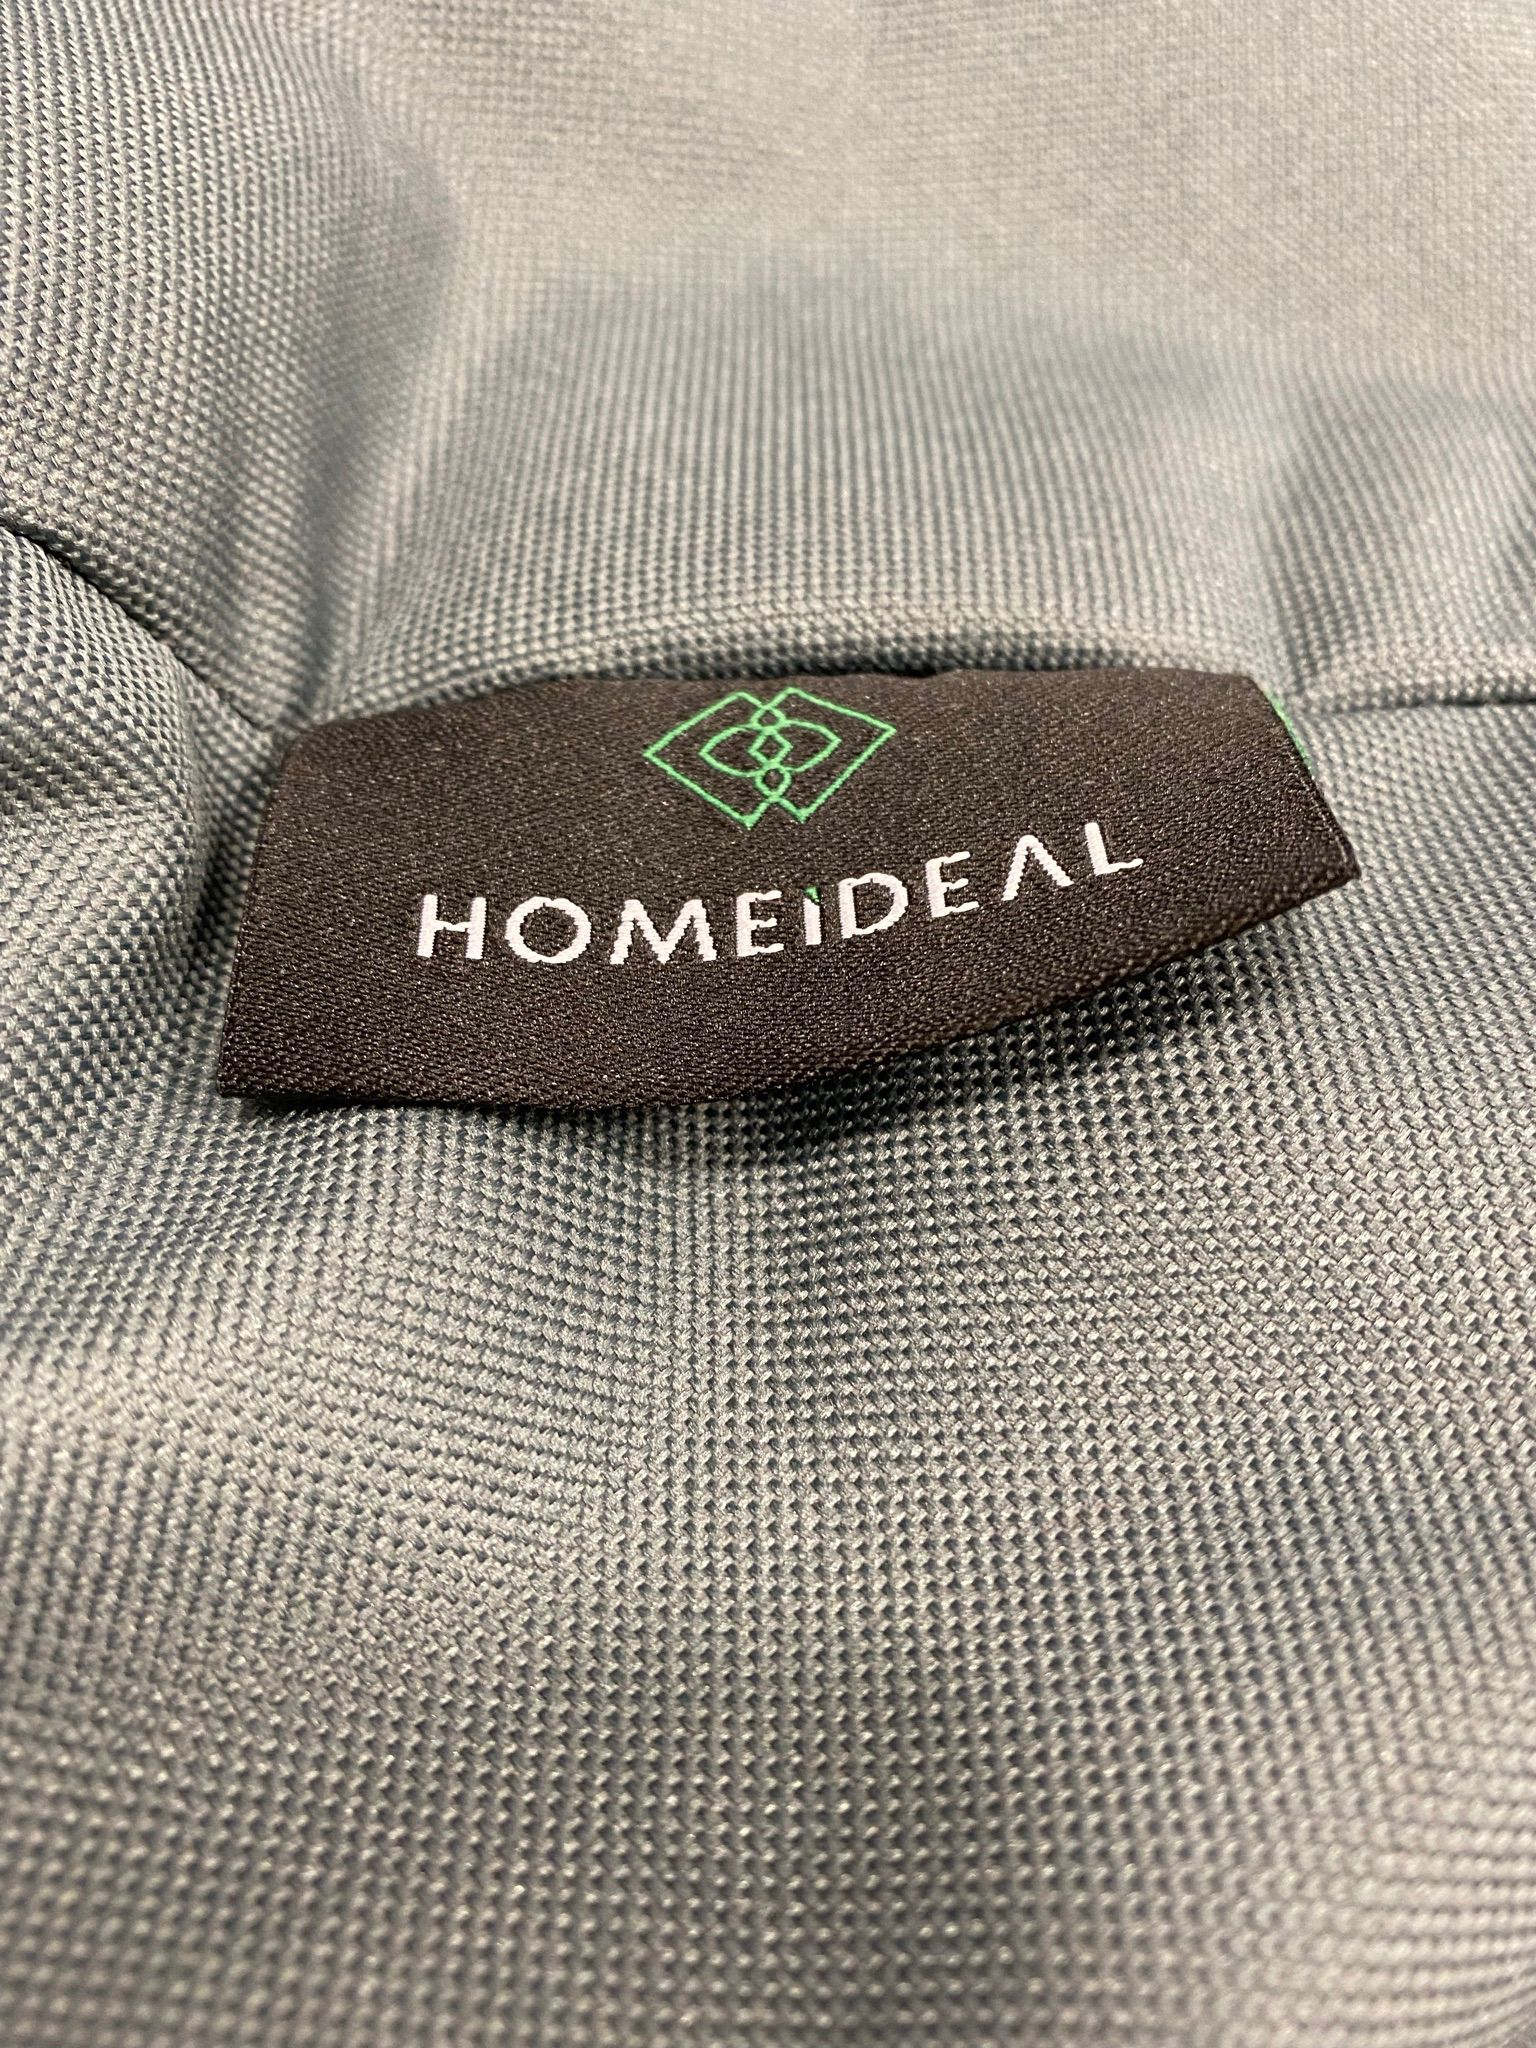 HomeIdeal Logo